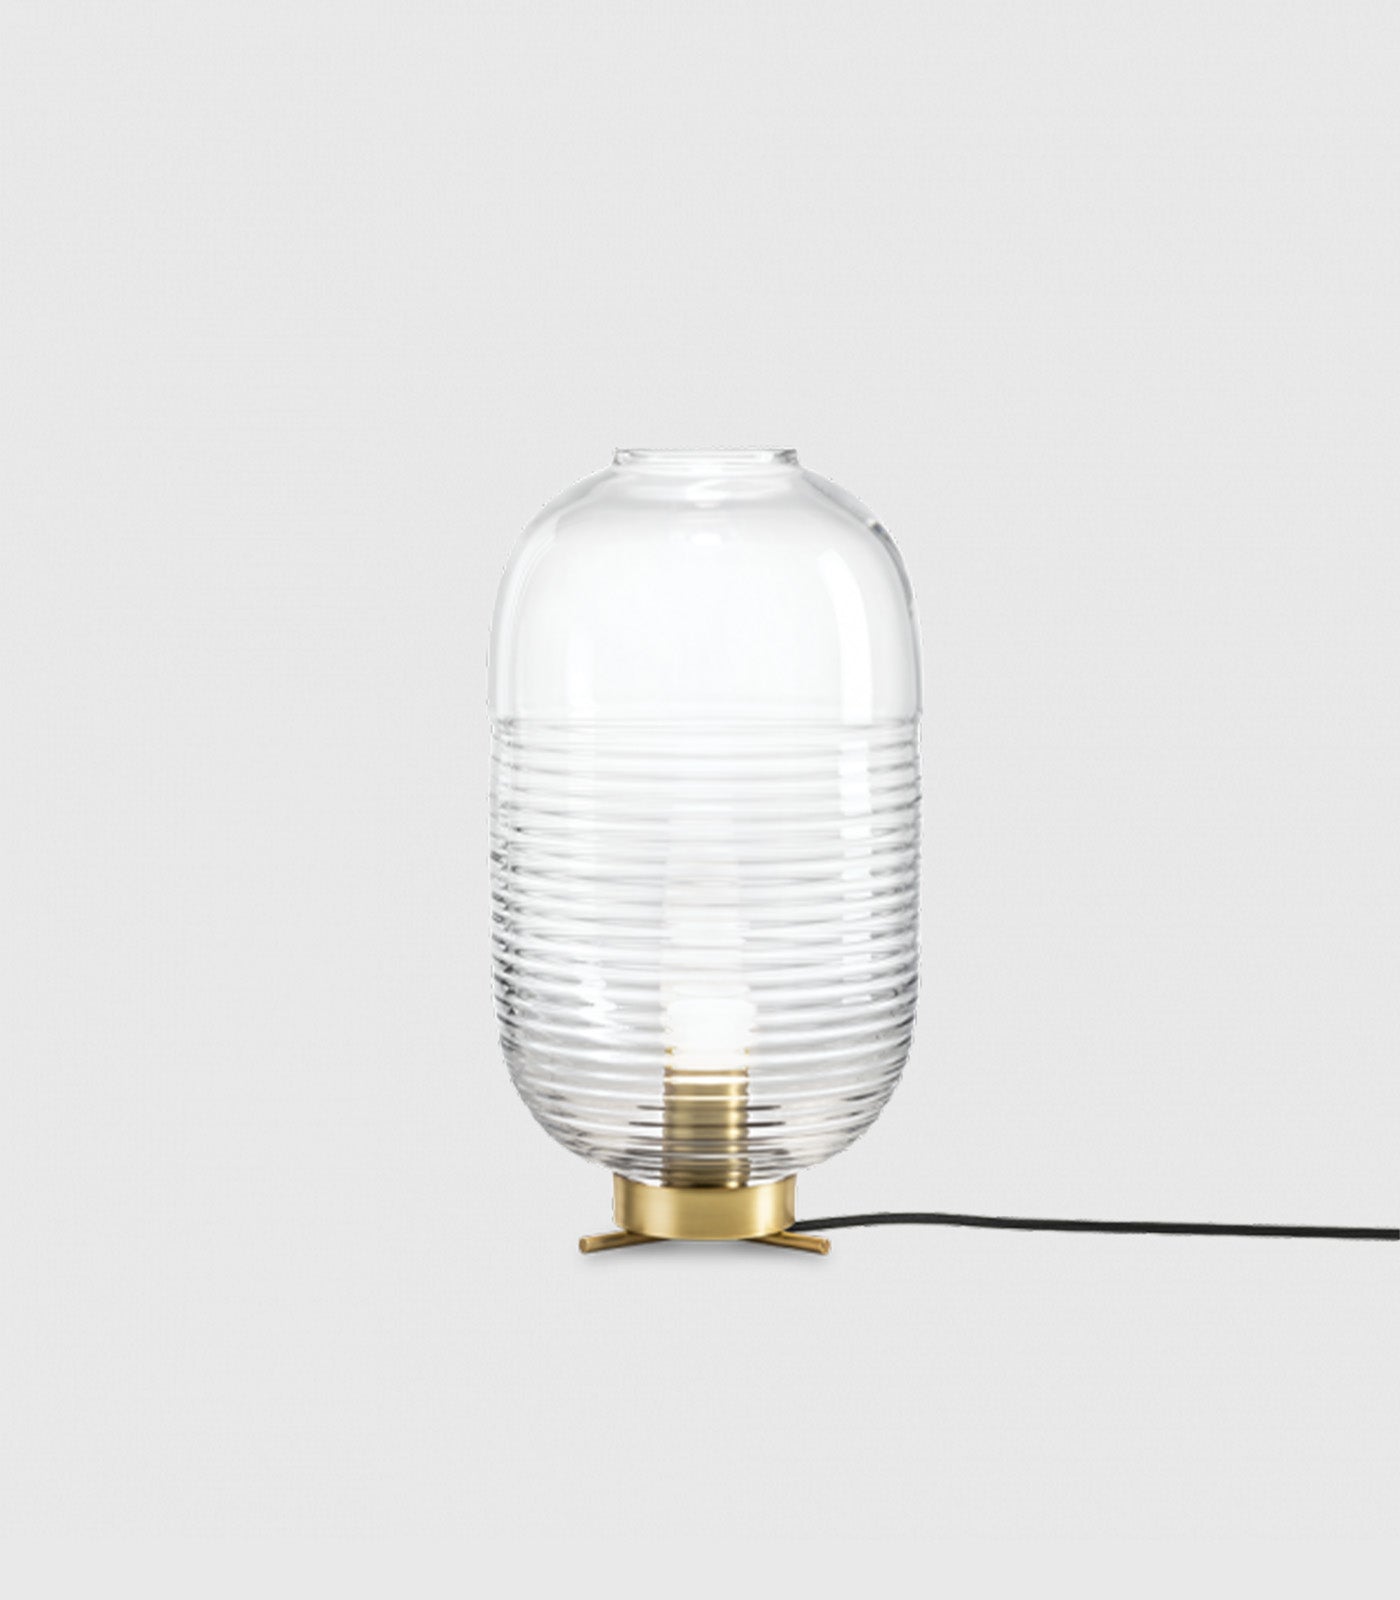 Lantern Floor Lamp